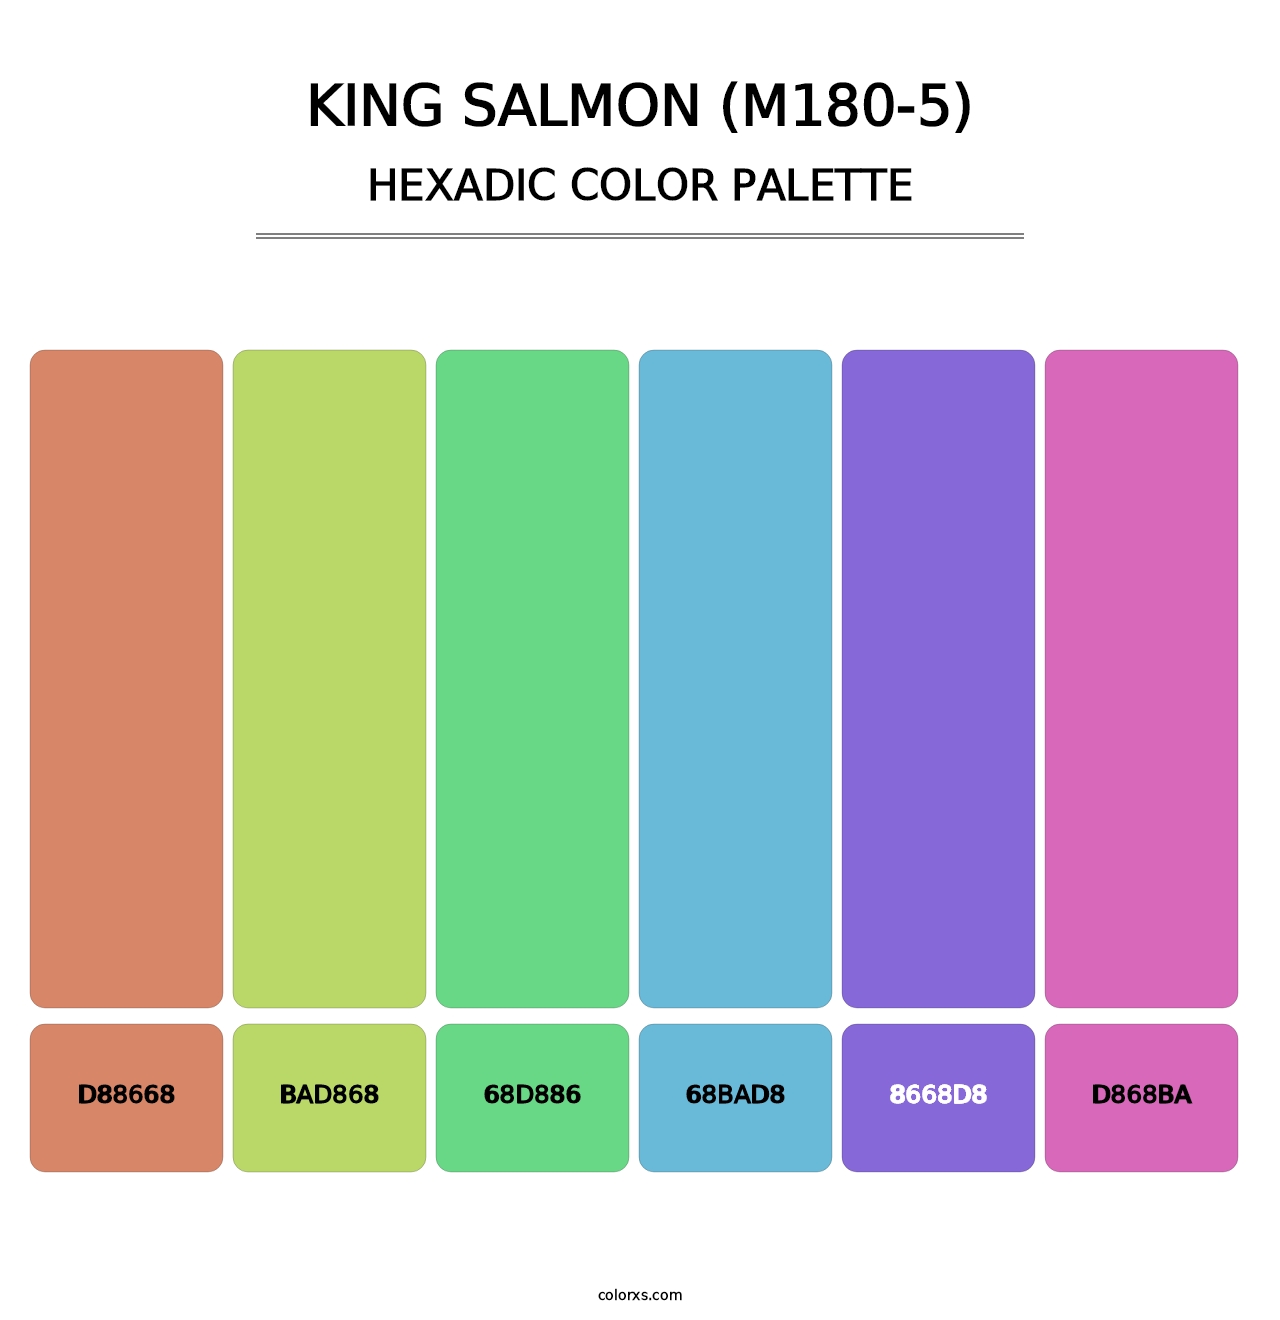 King Salmon (M180-5) - Hexadic Color Palette